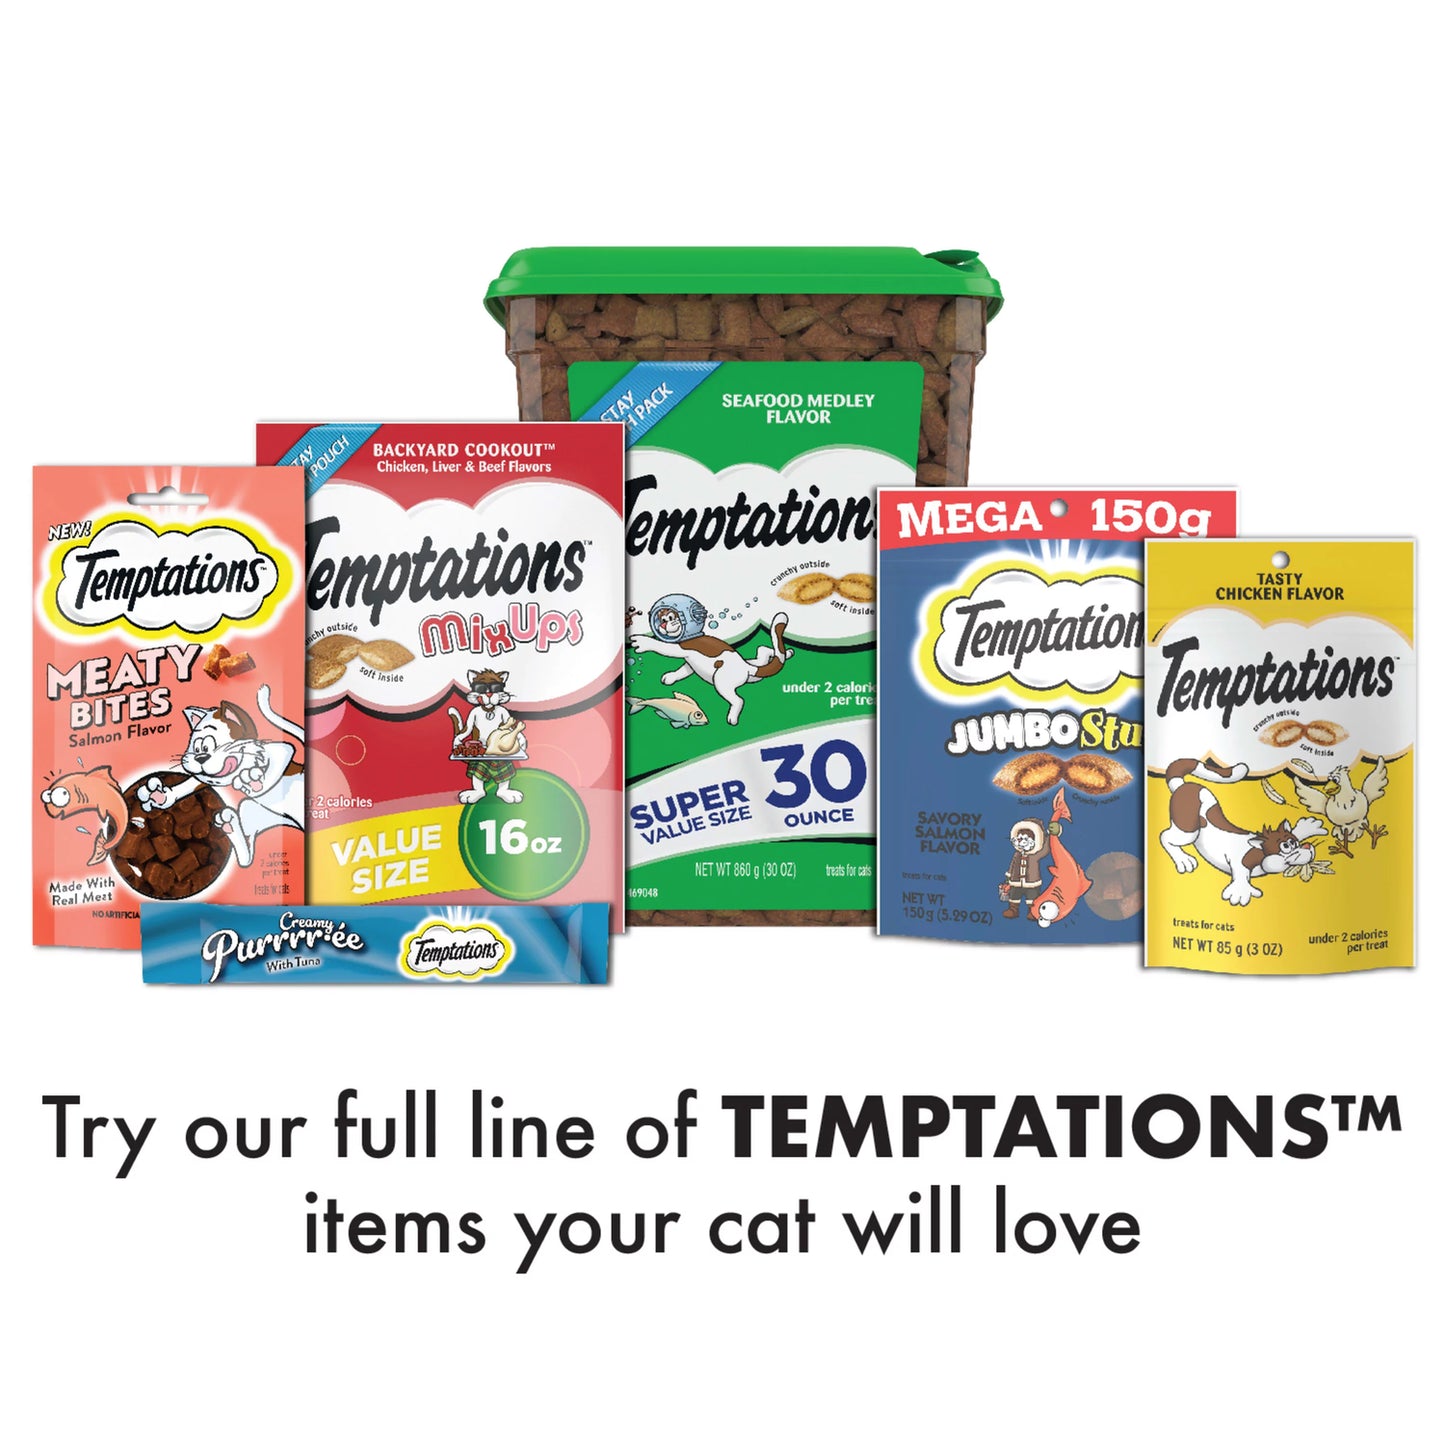 TEMPTATIONS Mixups Purricorn Crunchy and Soft Cat Treats, Chicken, Dairy & Shrimp Flavors, 3 Oz. Pouch